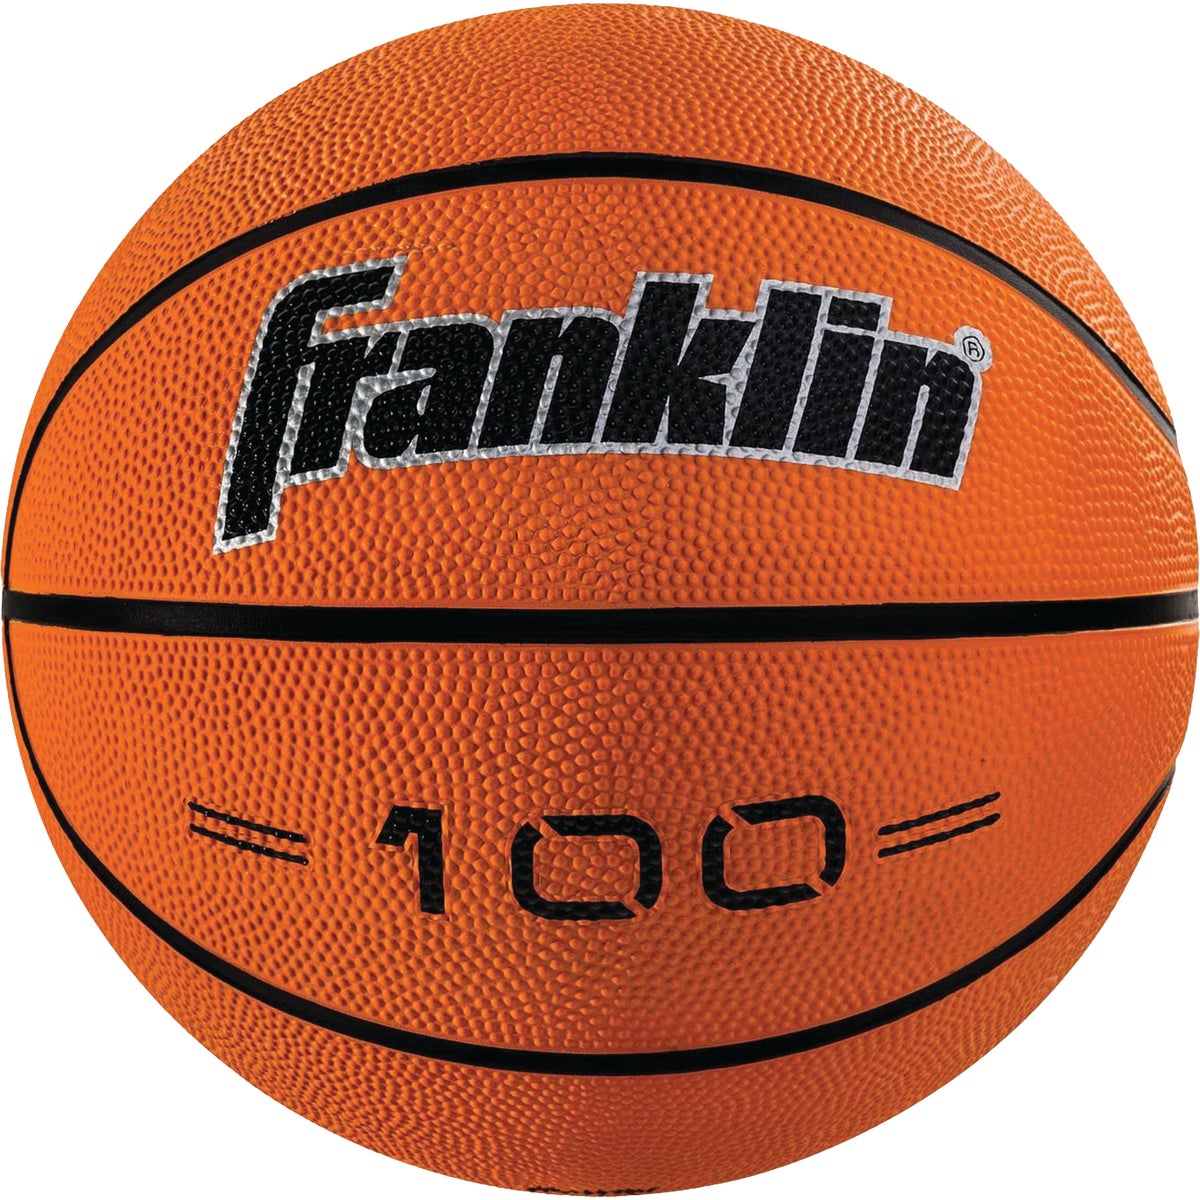 Item 808282, Grip-Rite 100 basketball.